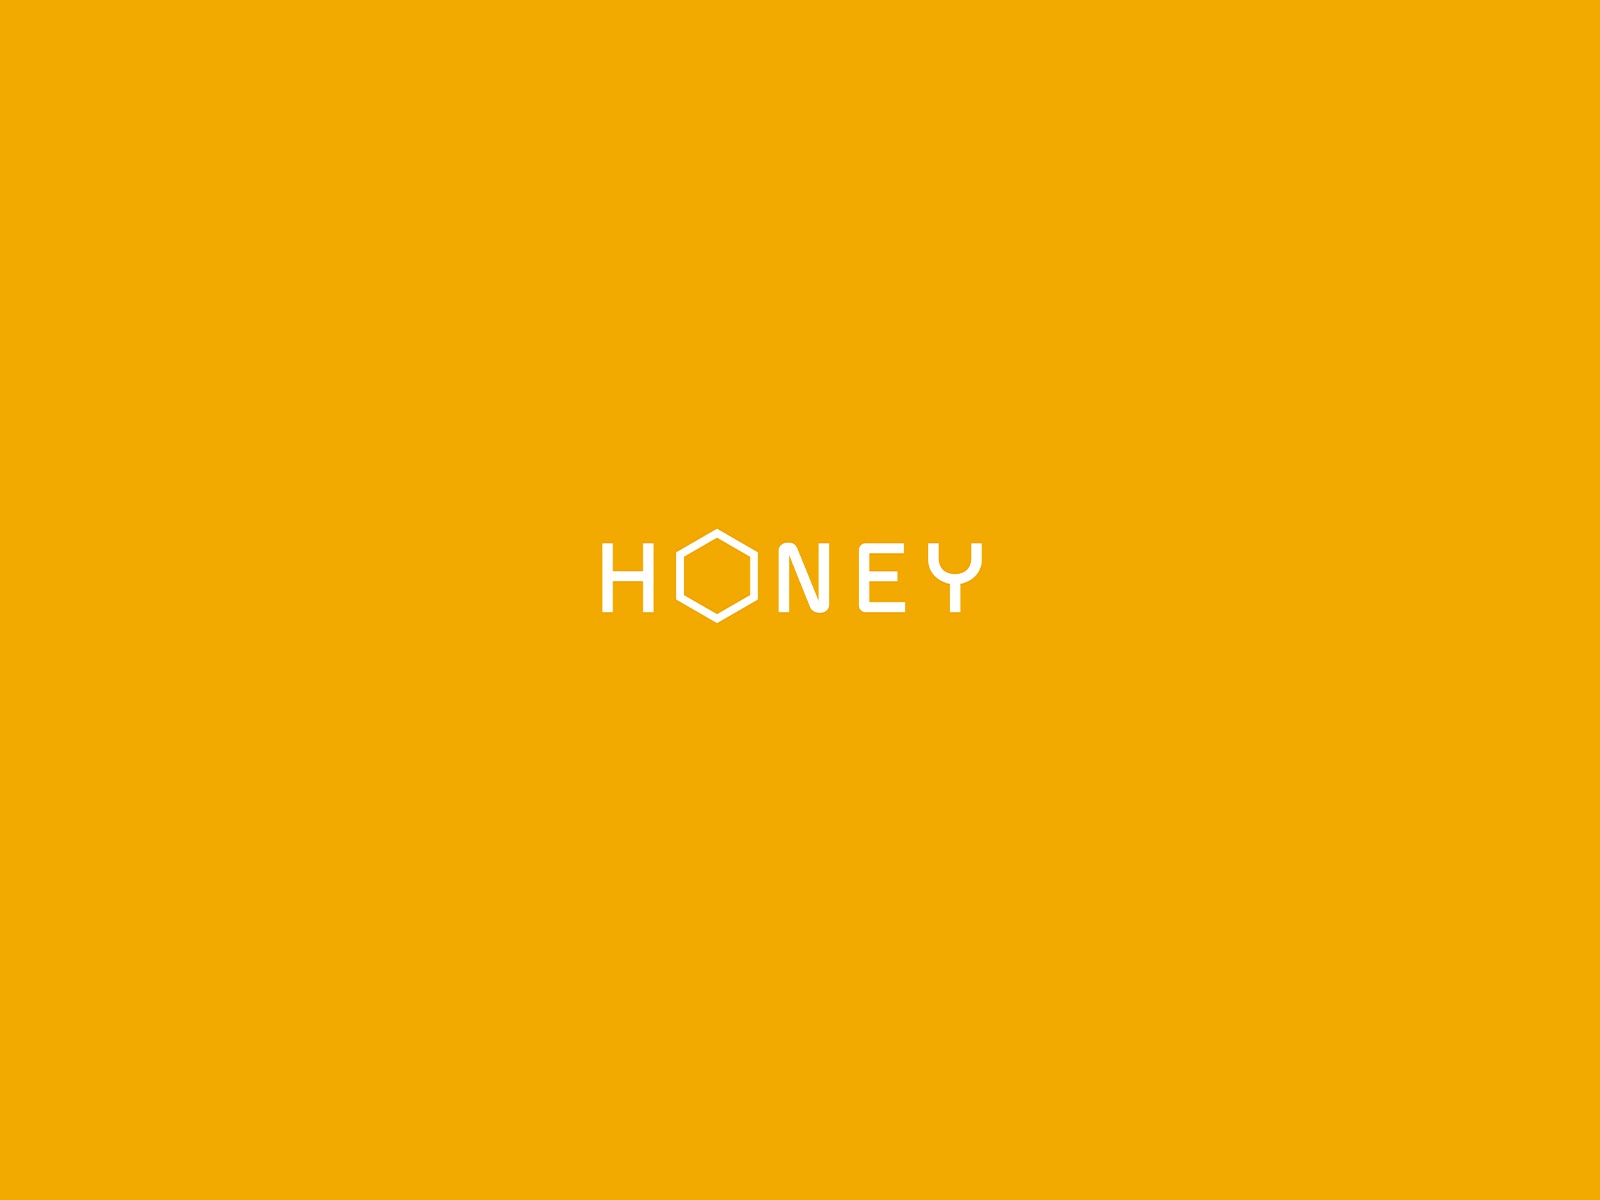 A honey logo with a honeycomb - Honey